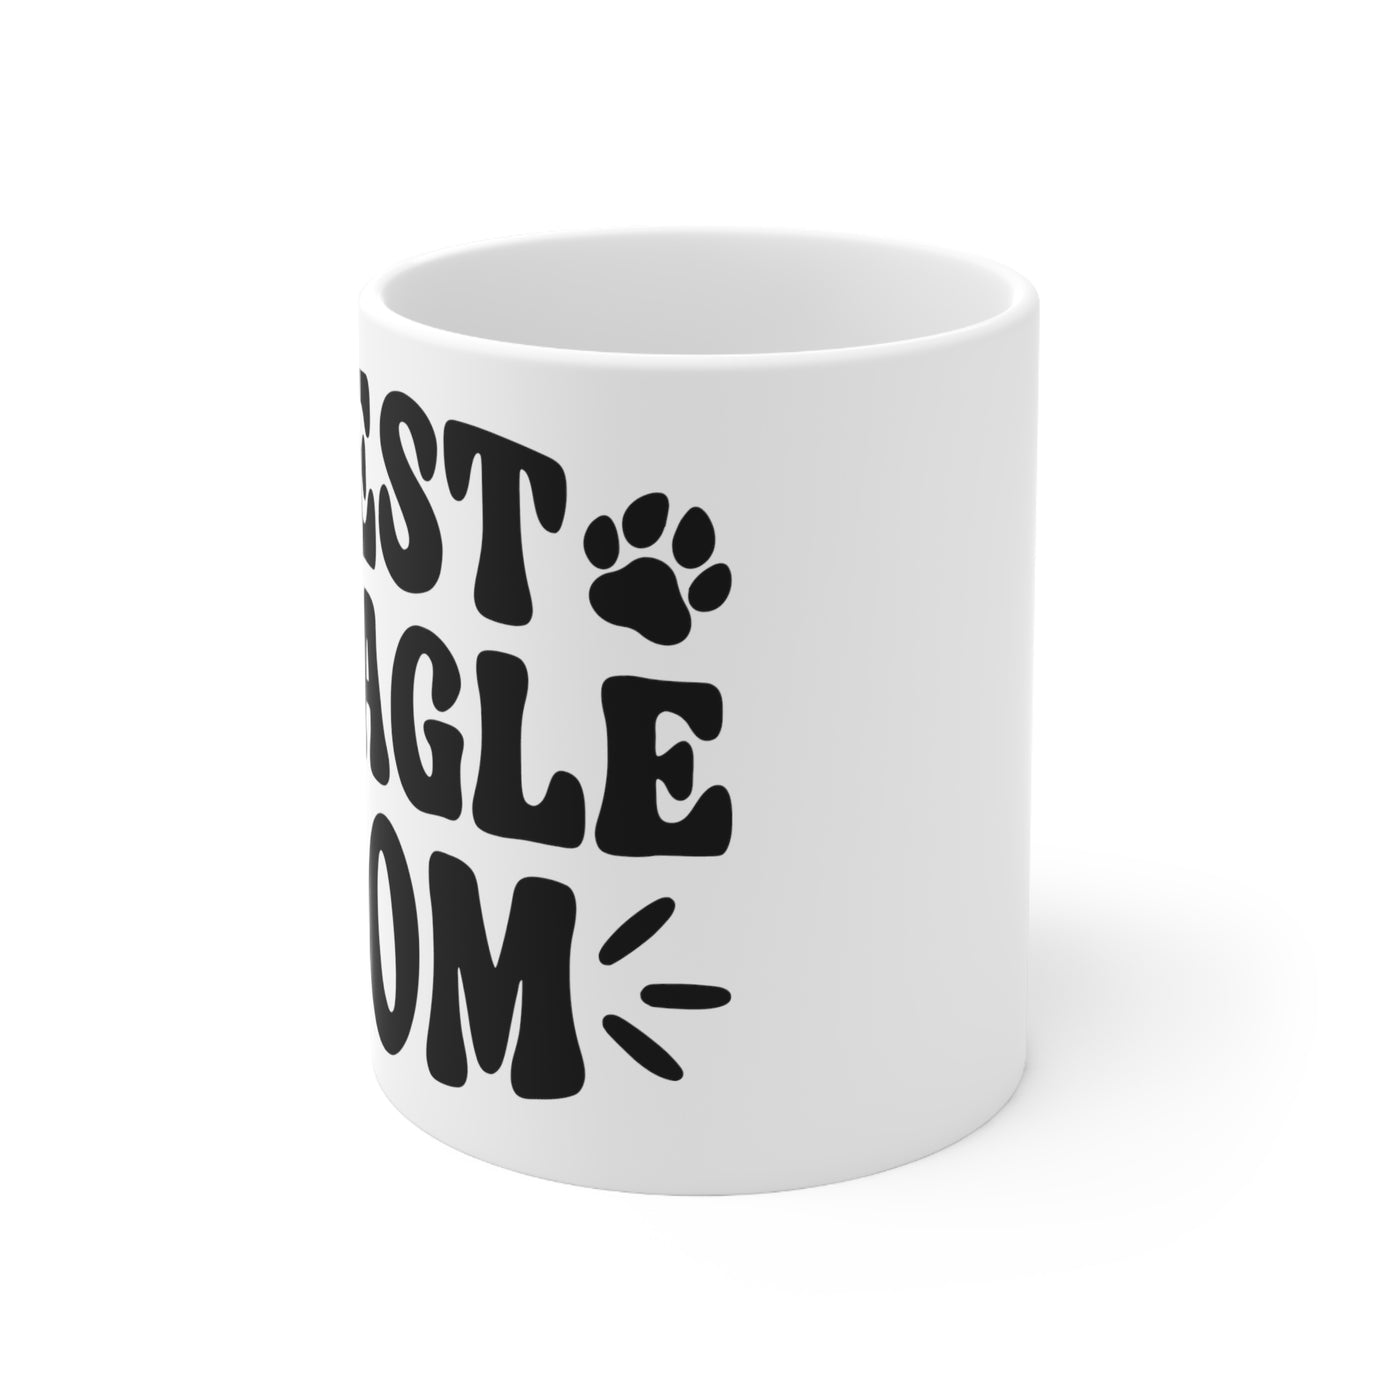 Best Beagle Mom Mug